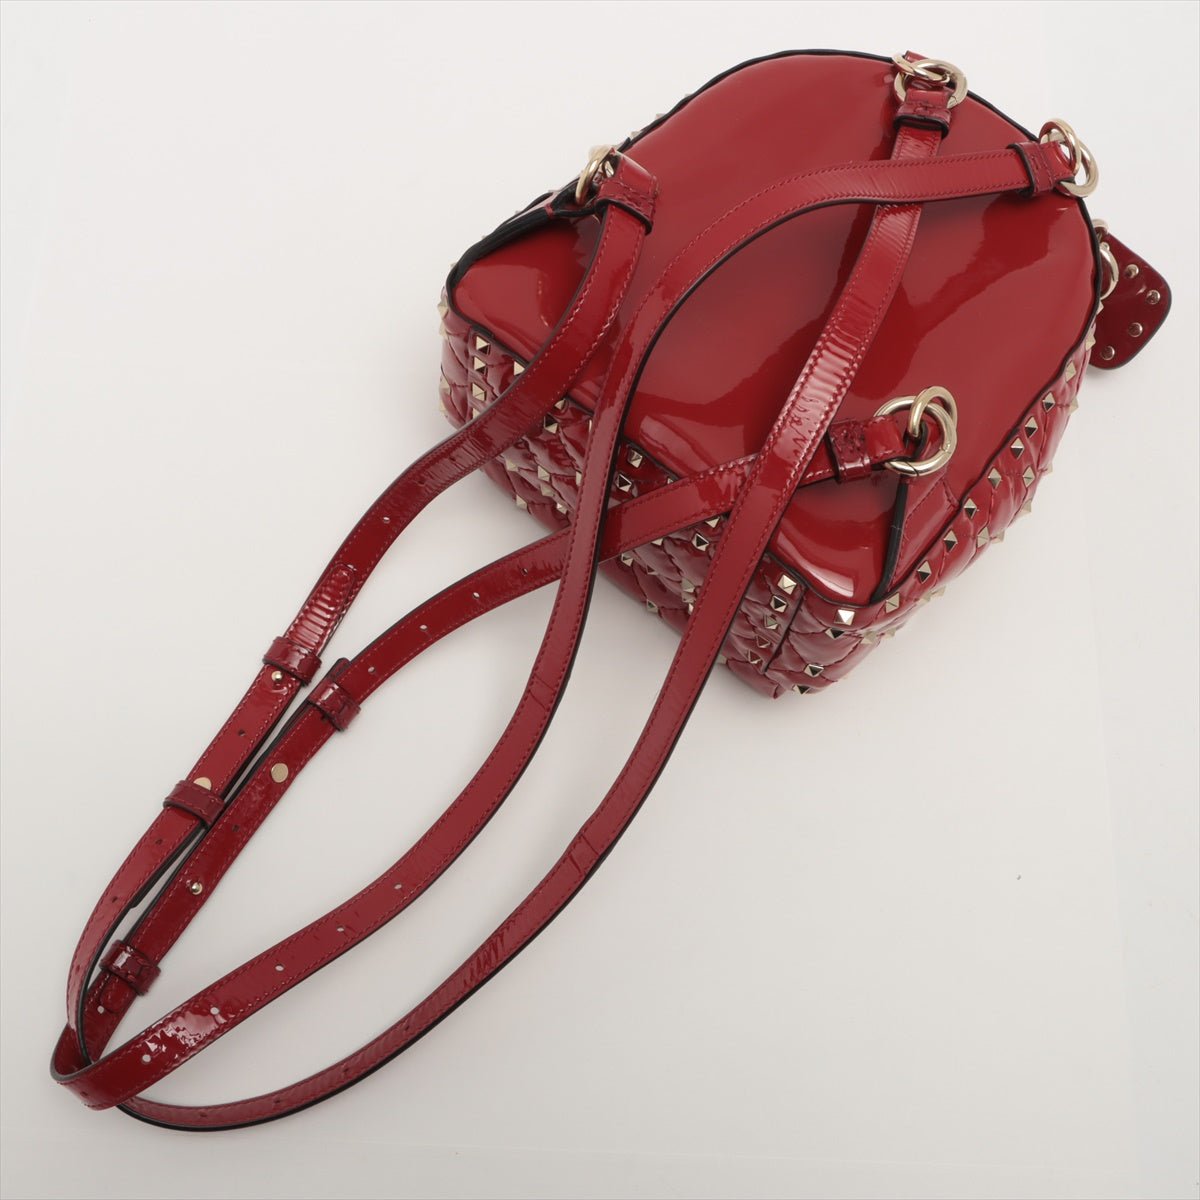 Valentino Garavani Rockstud Mini Backpack in Red Patent Leather - Tabita  Bags – Tabita Bags with Love